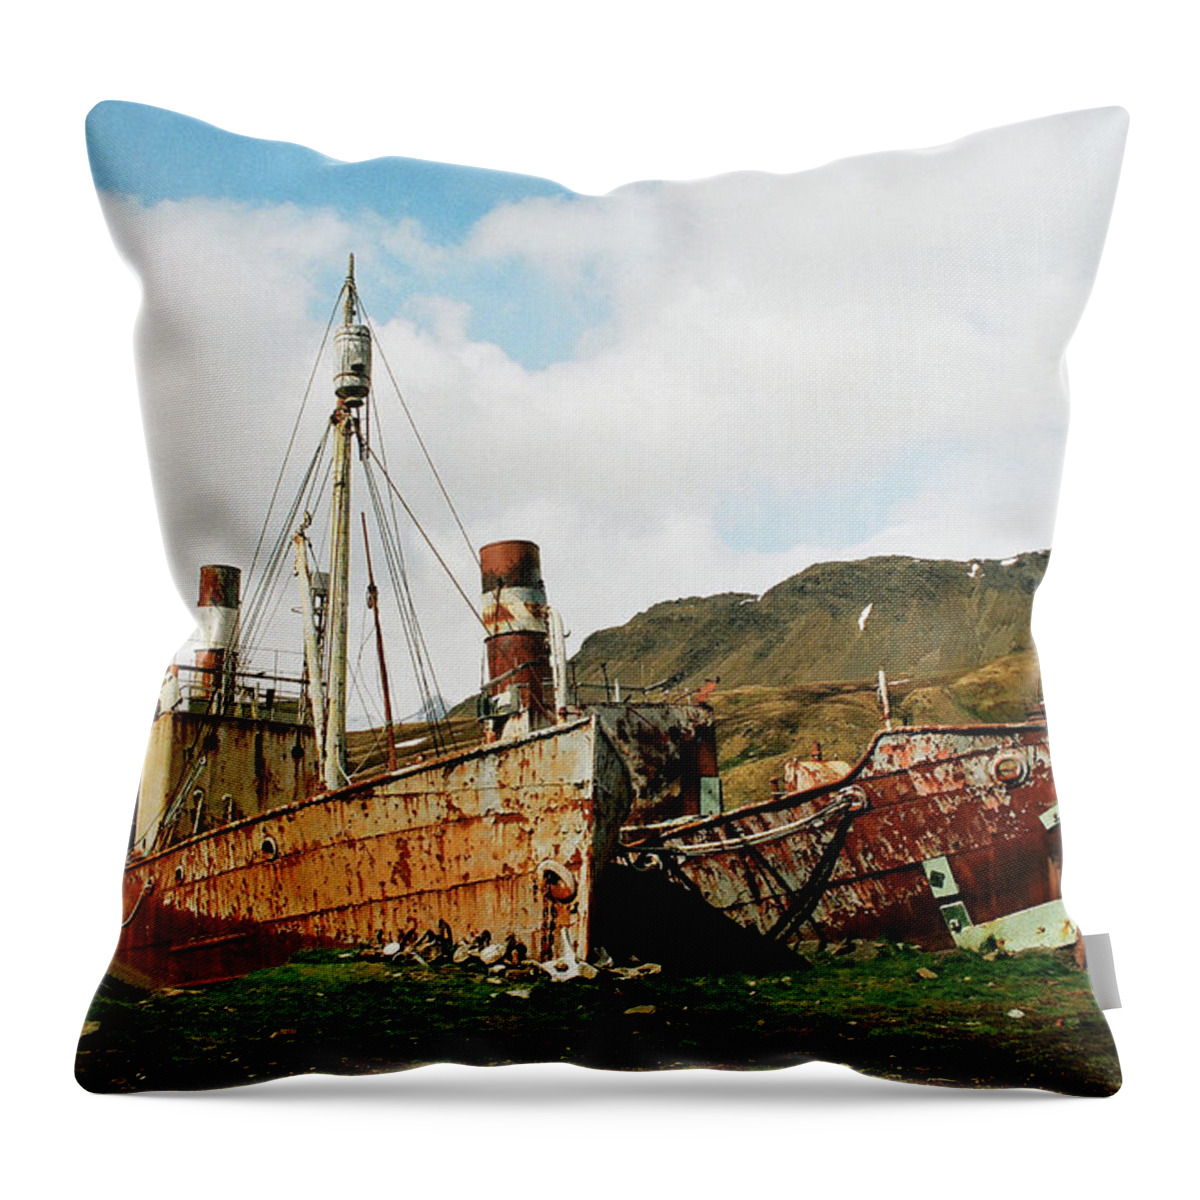 Grytviken Throw Pillow featuring the photograph Grytviken Ghosts by David Bader